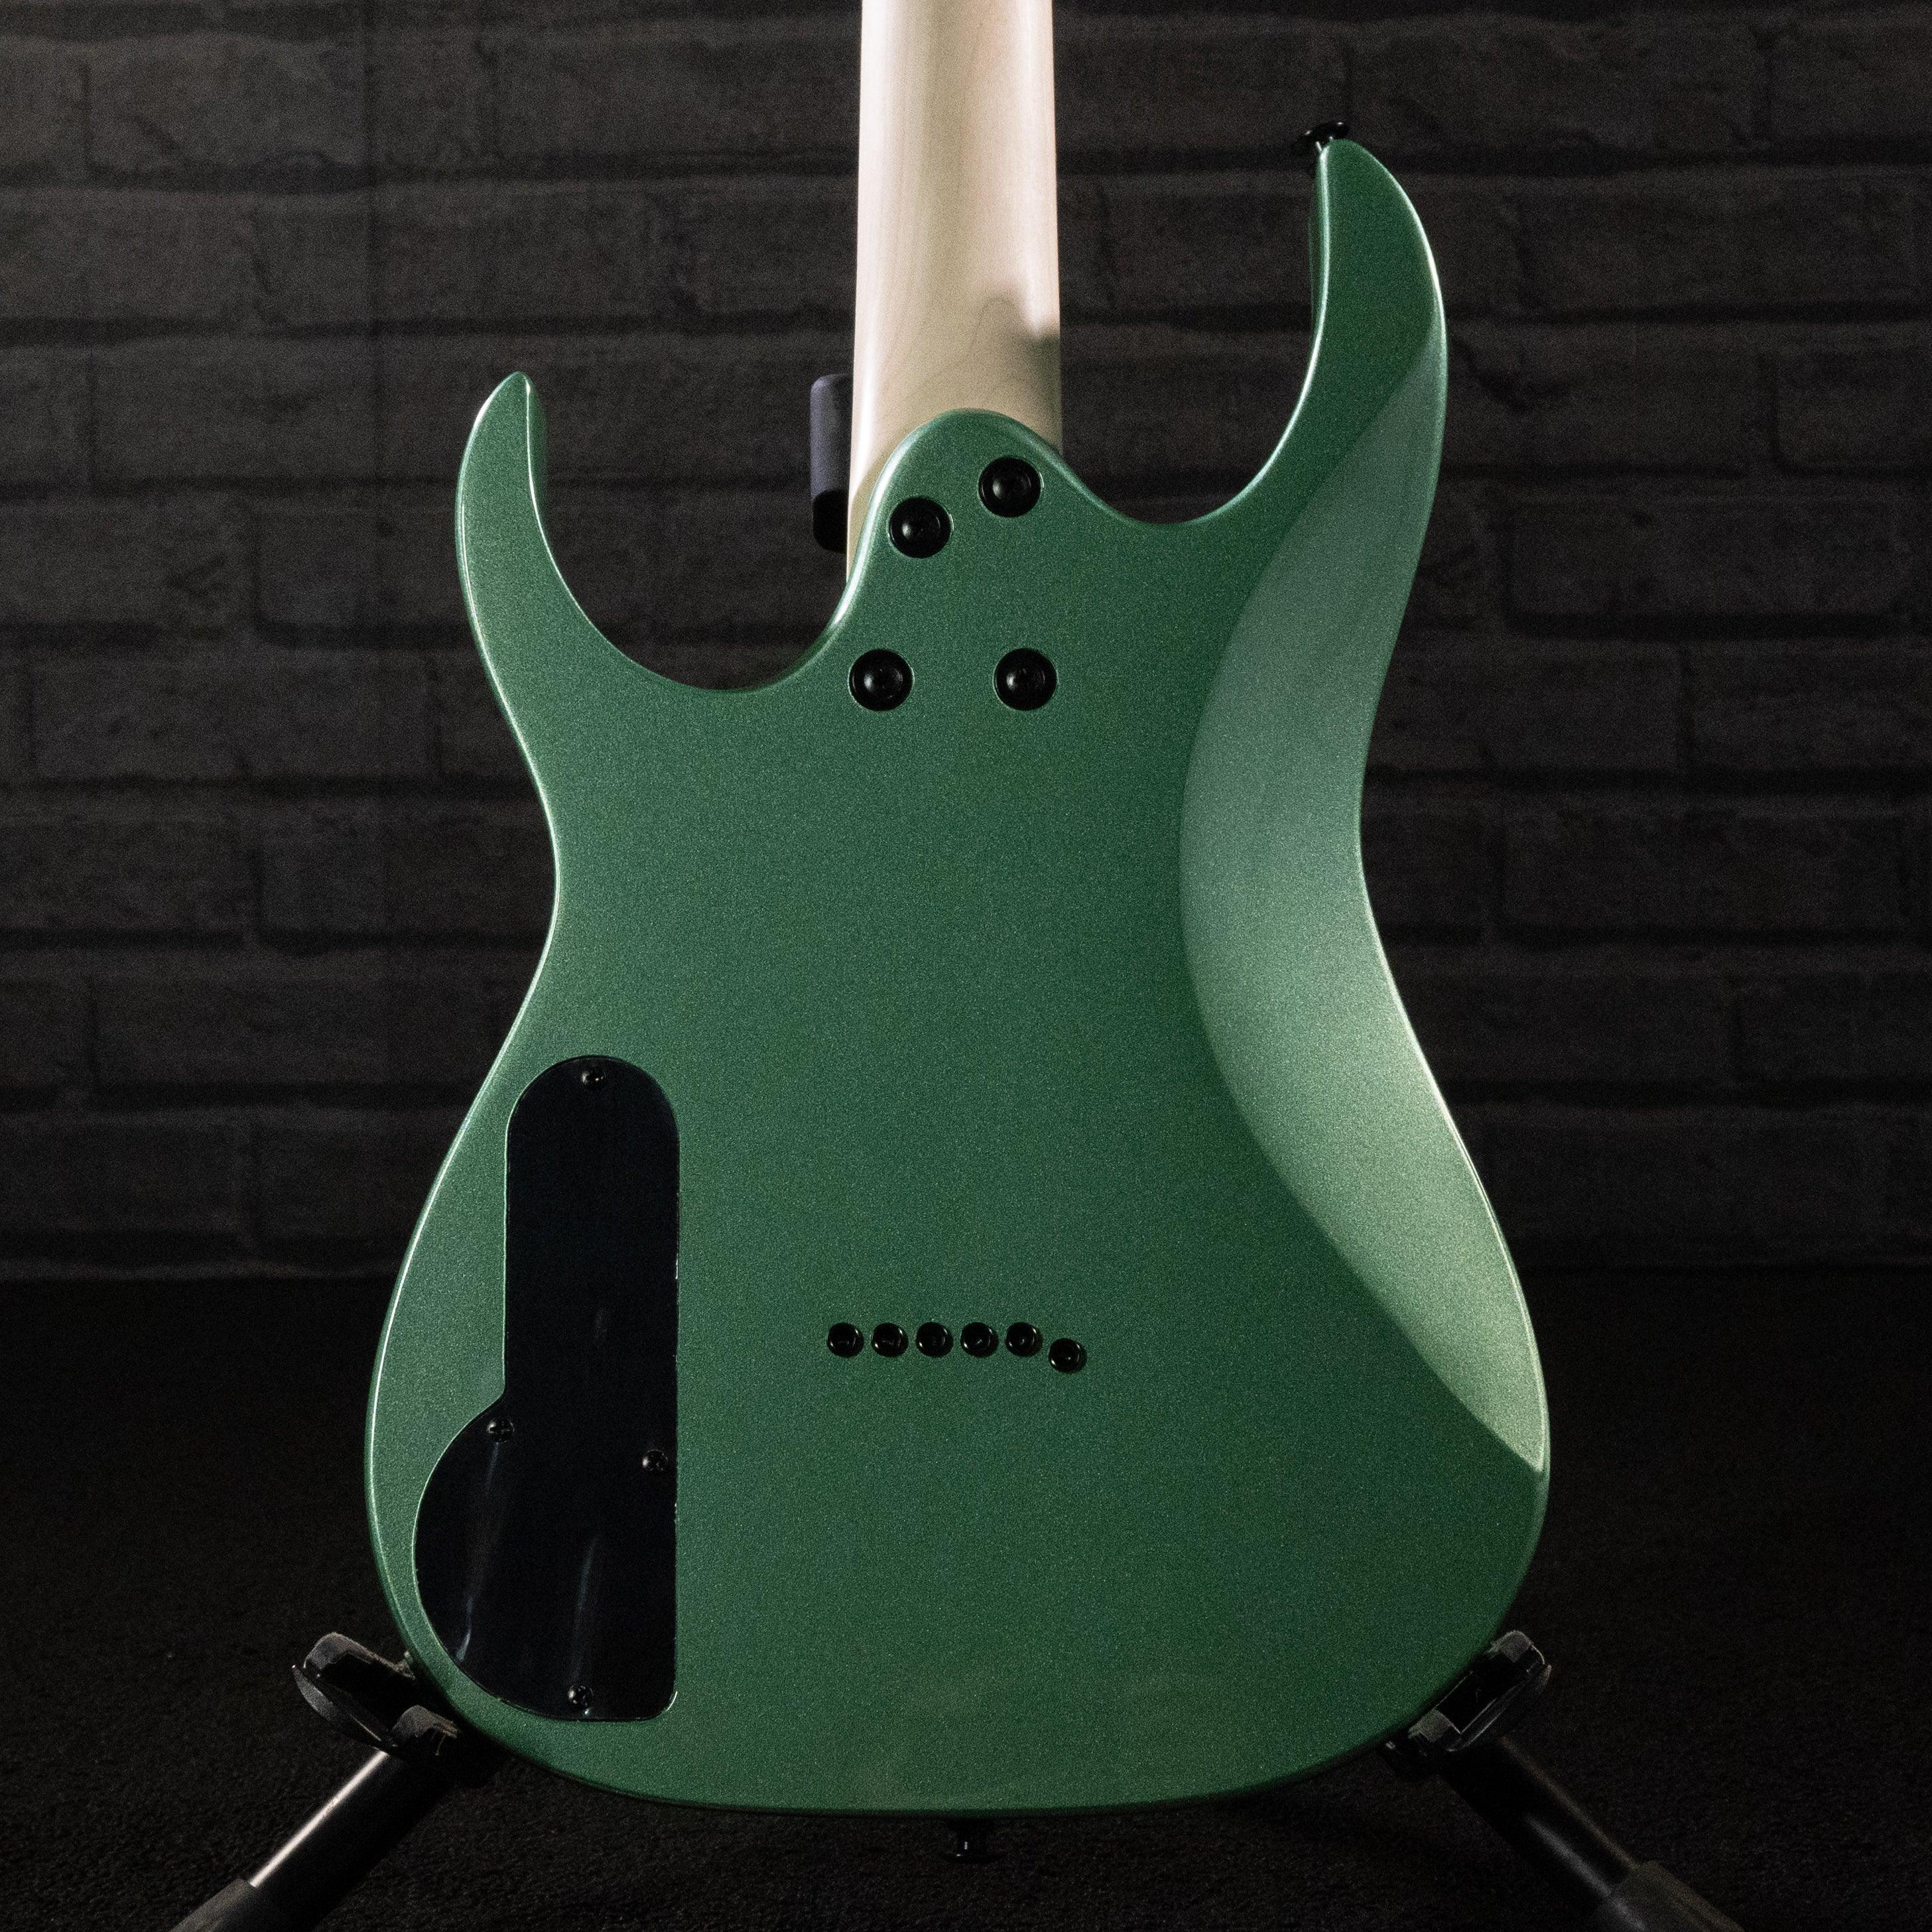 Ibanez Paul Gilbert Signature Mikro PGMM21 Short-Scale Electric Guitar (Metallic Light Green) - Impulse Music Co.